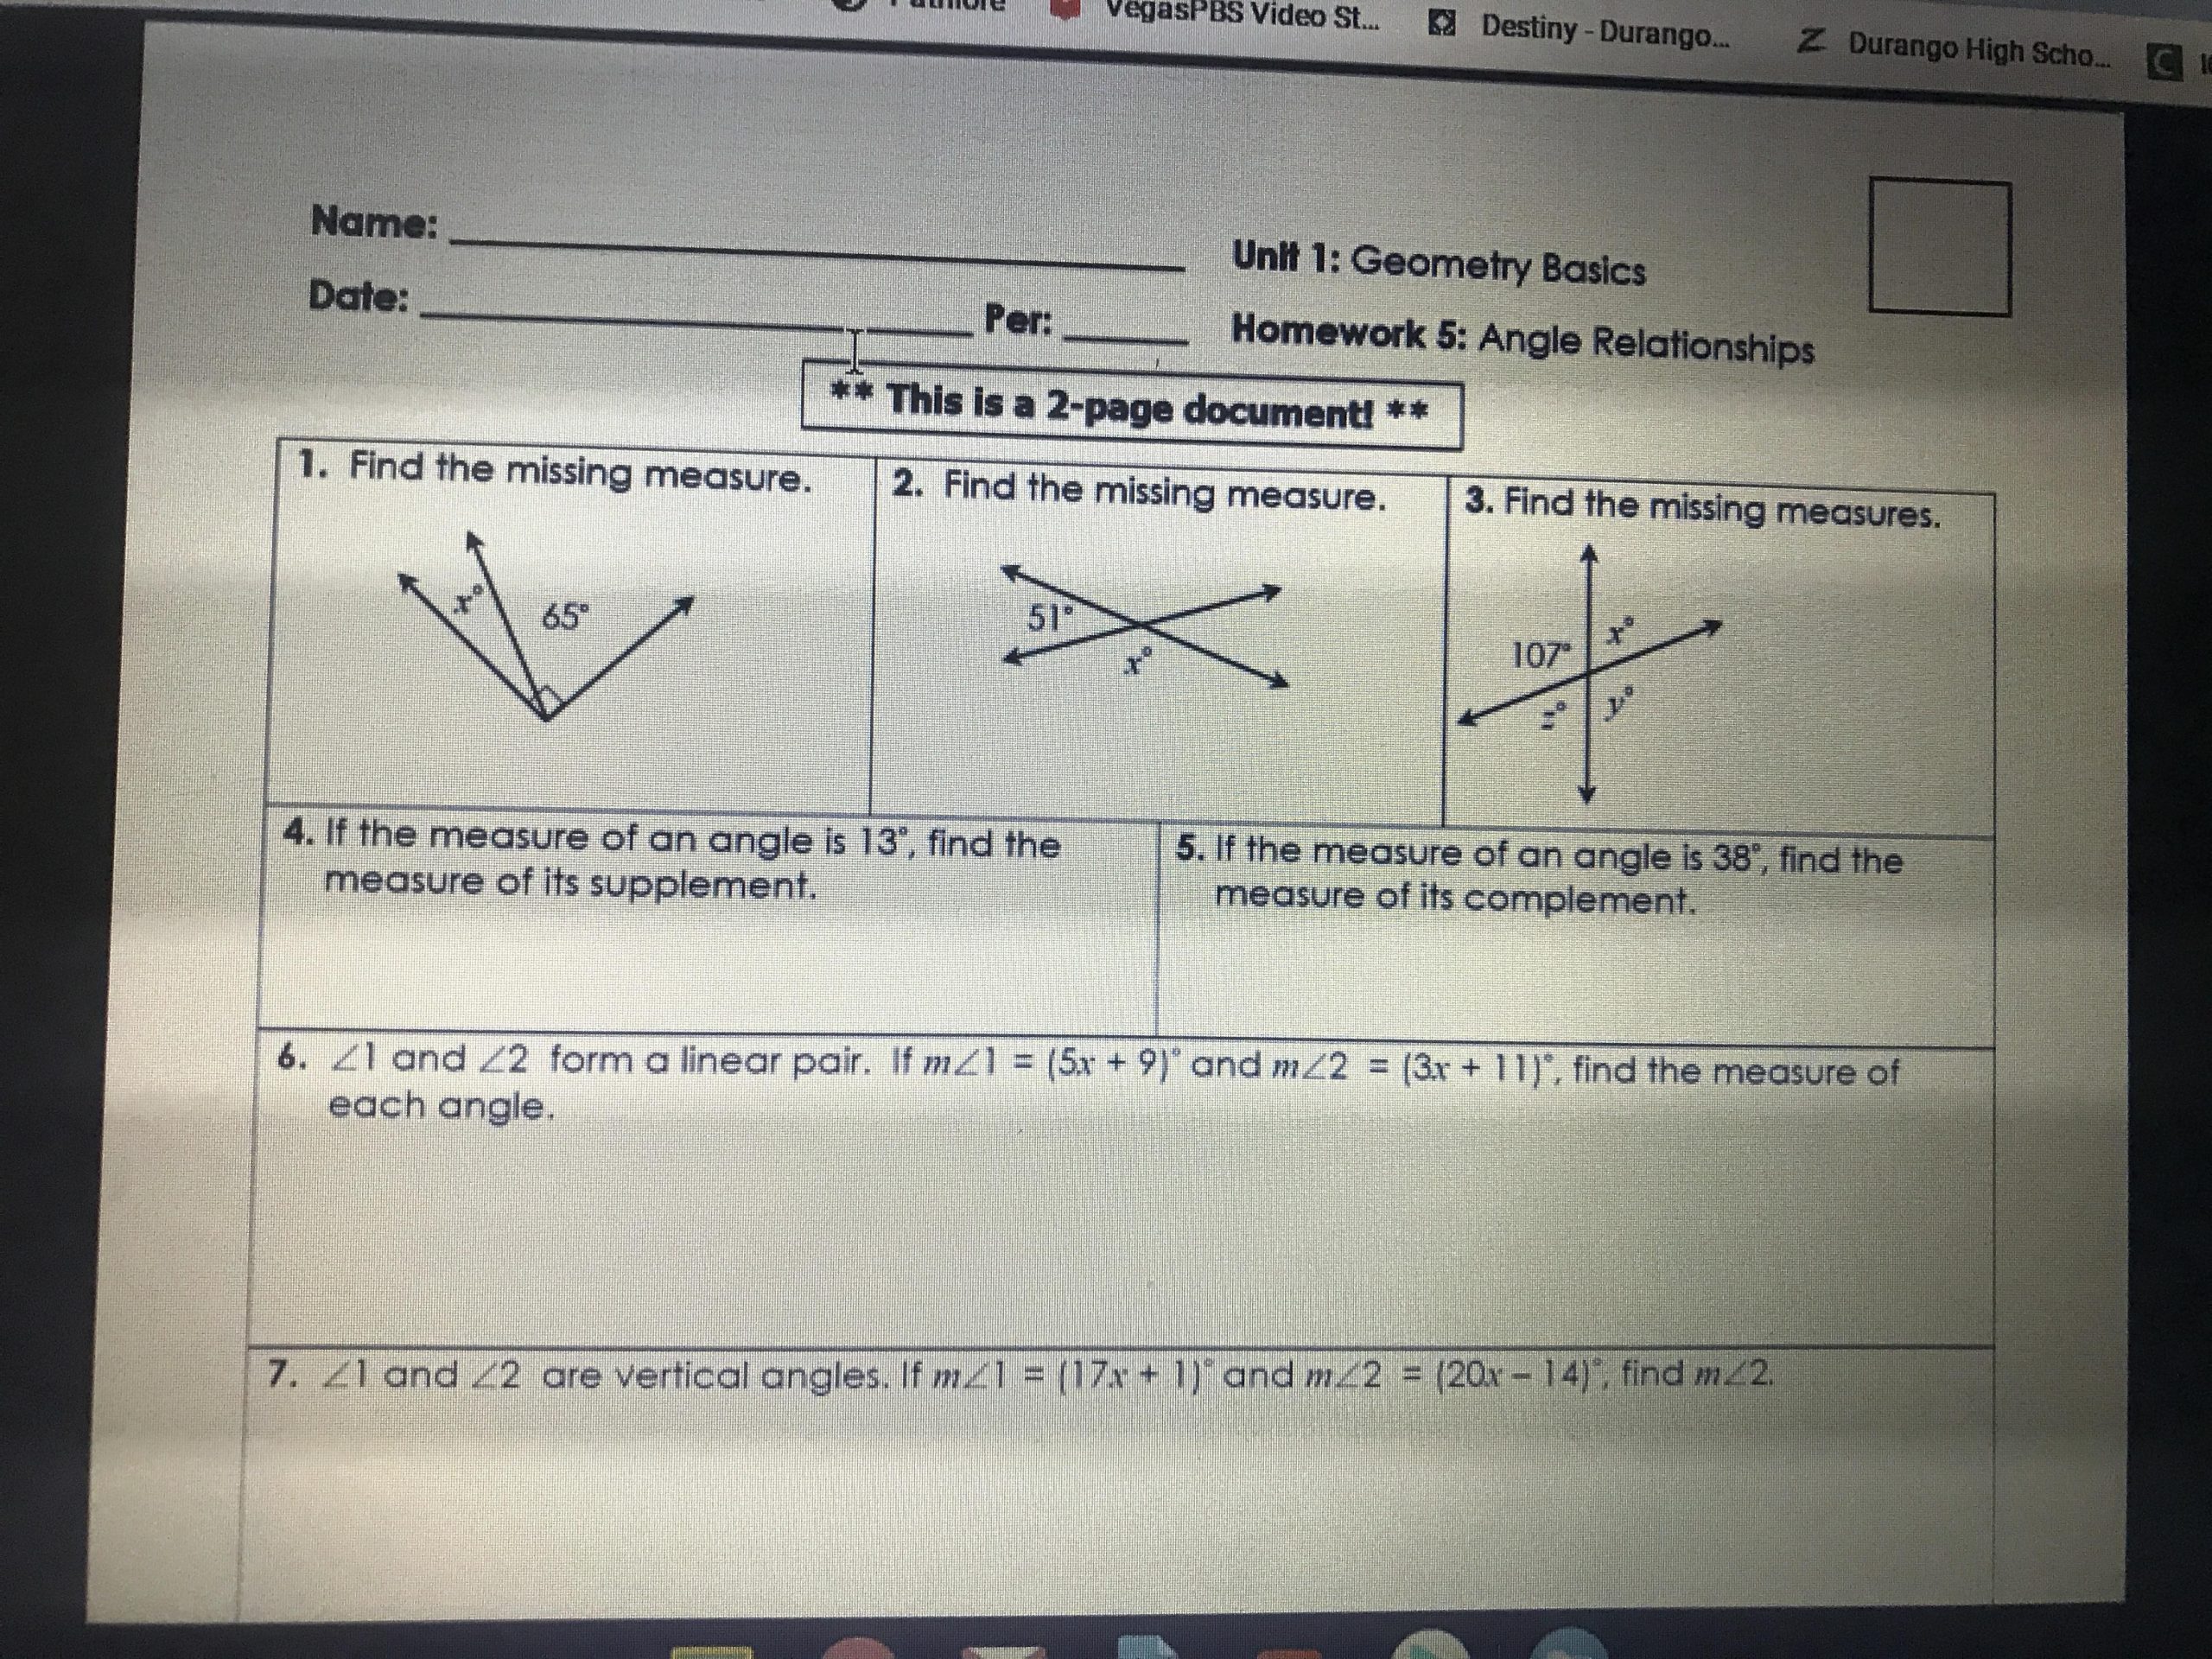 i need help quick!! this is unit 1:geometry basics ...